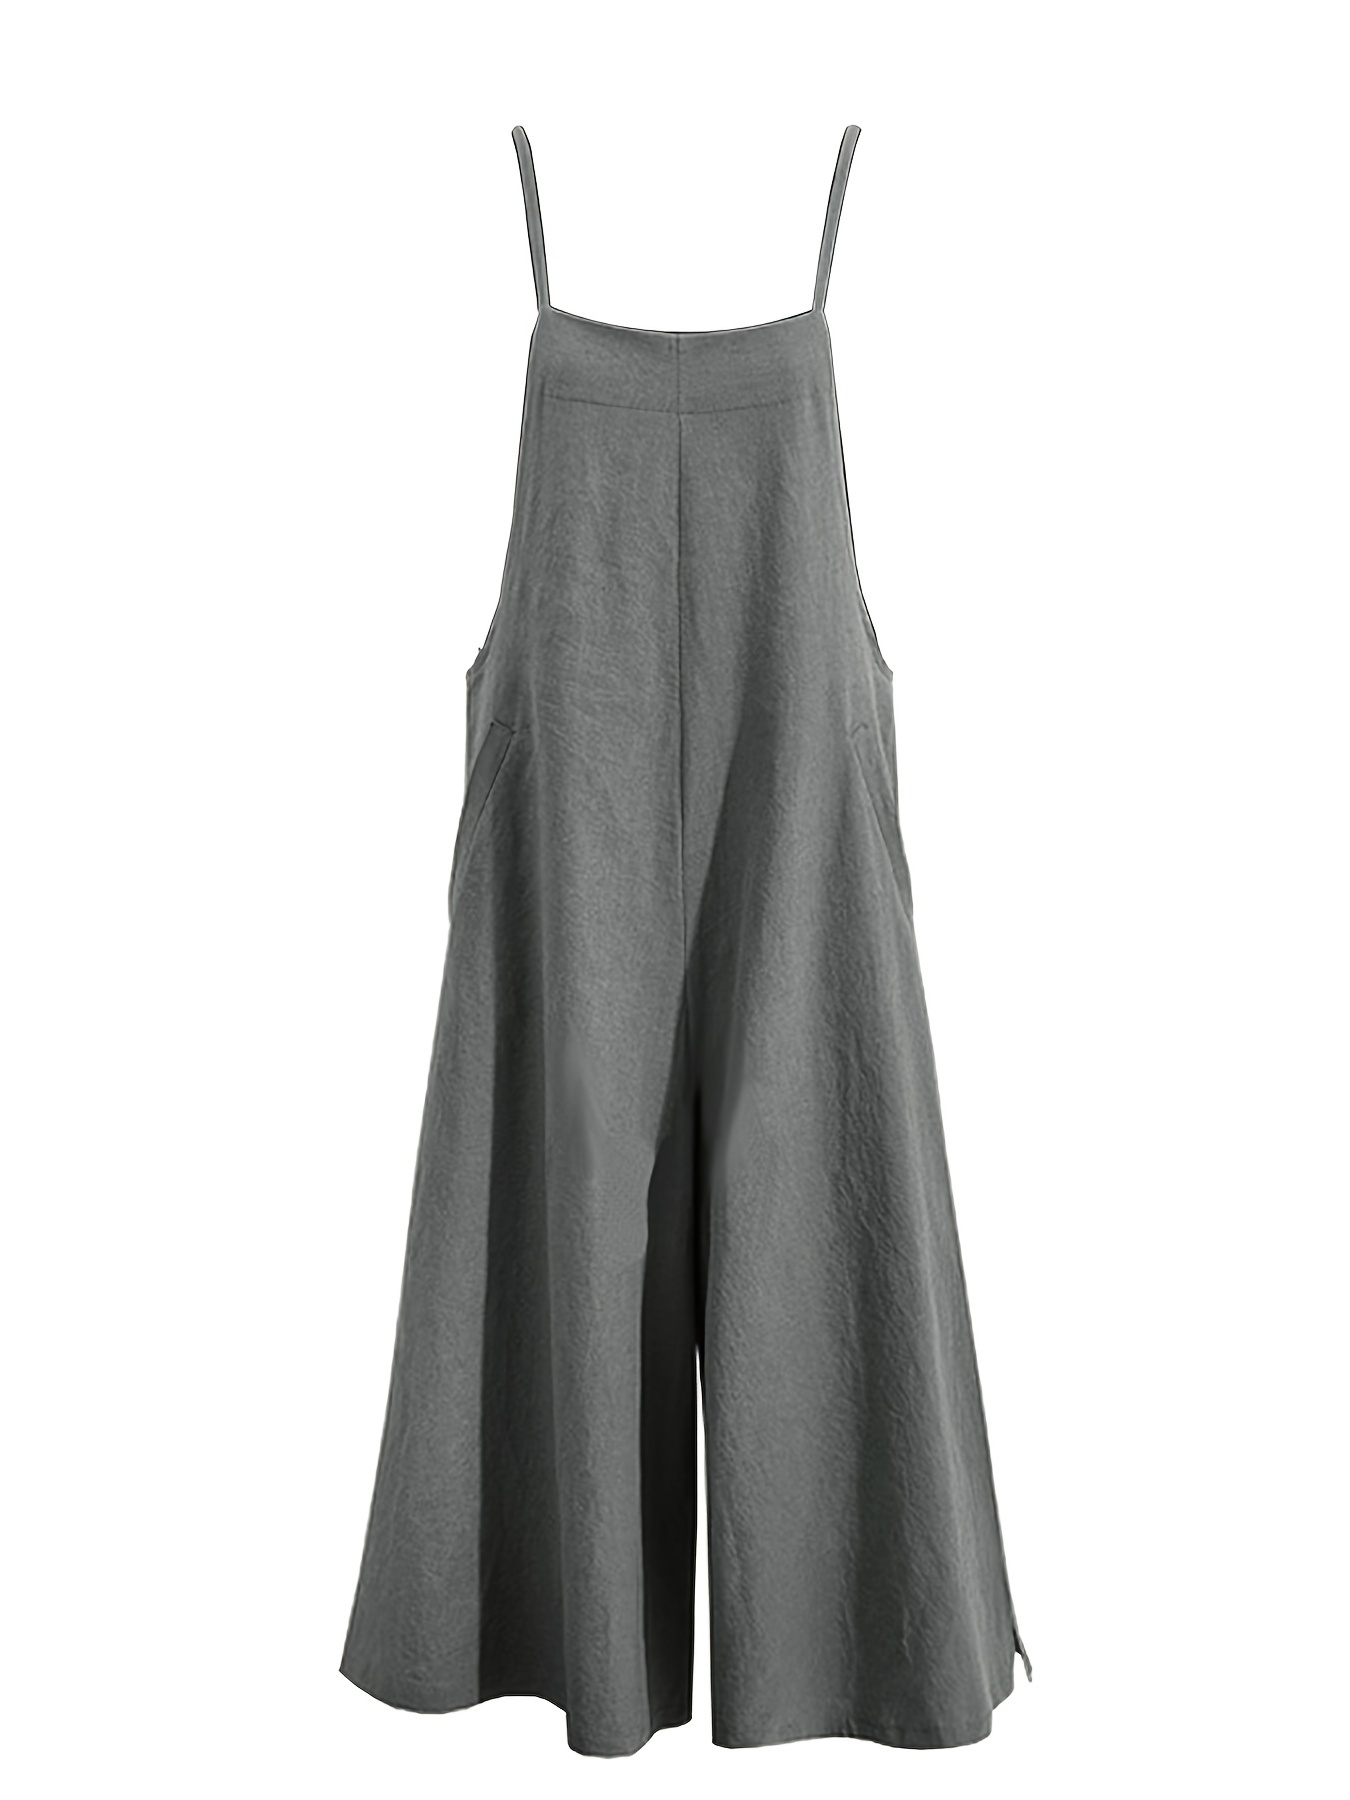 Just Be: Gray Jersey Knit Ultra Soft Wide Leg Jumpsuit w/Pockets